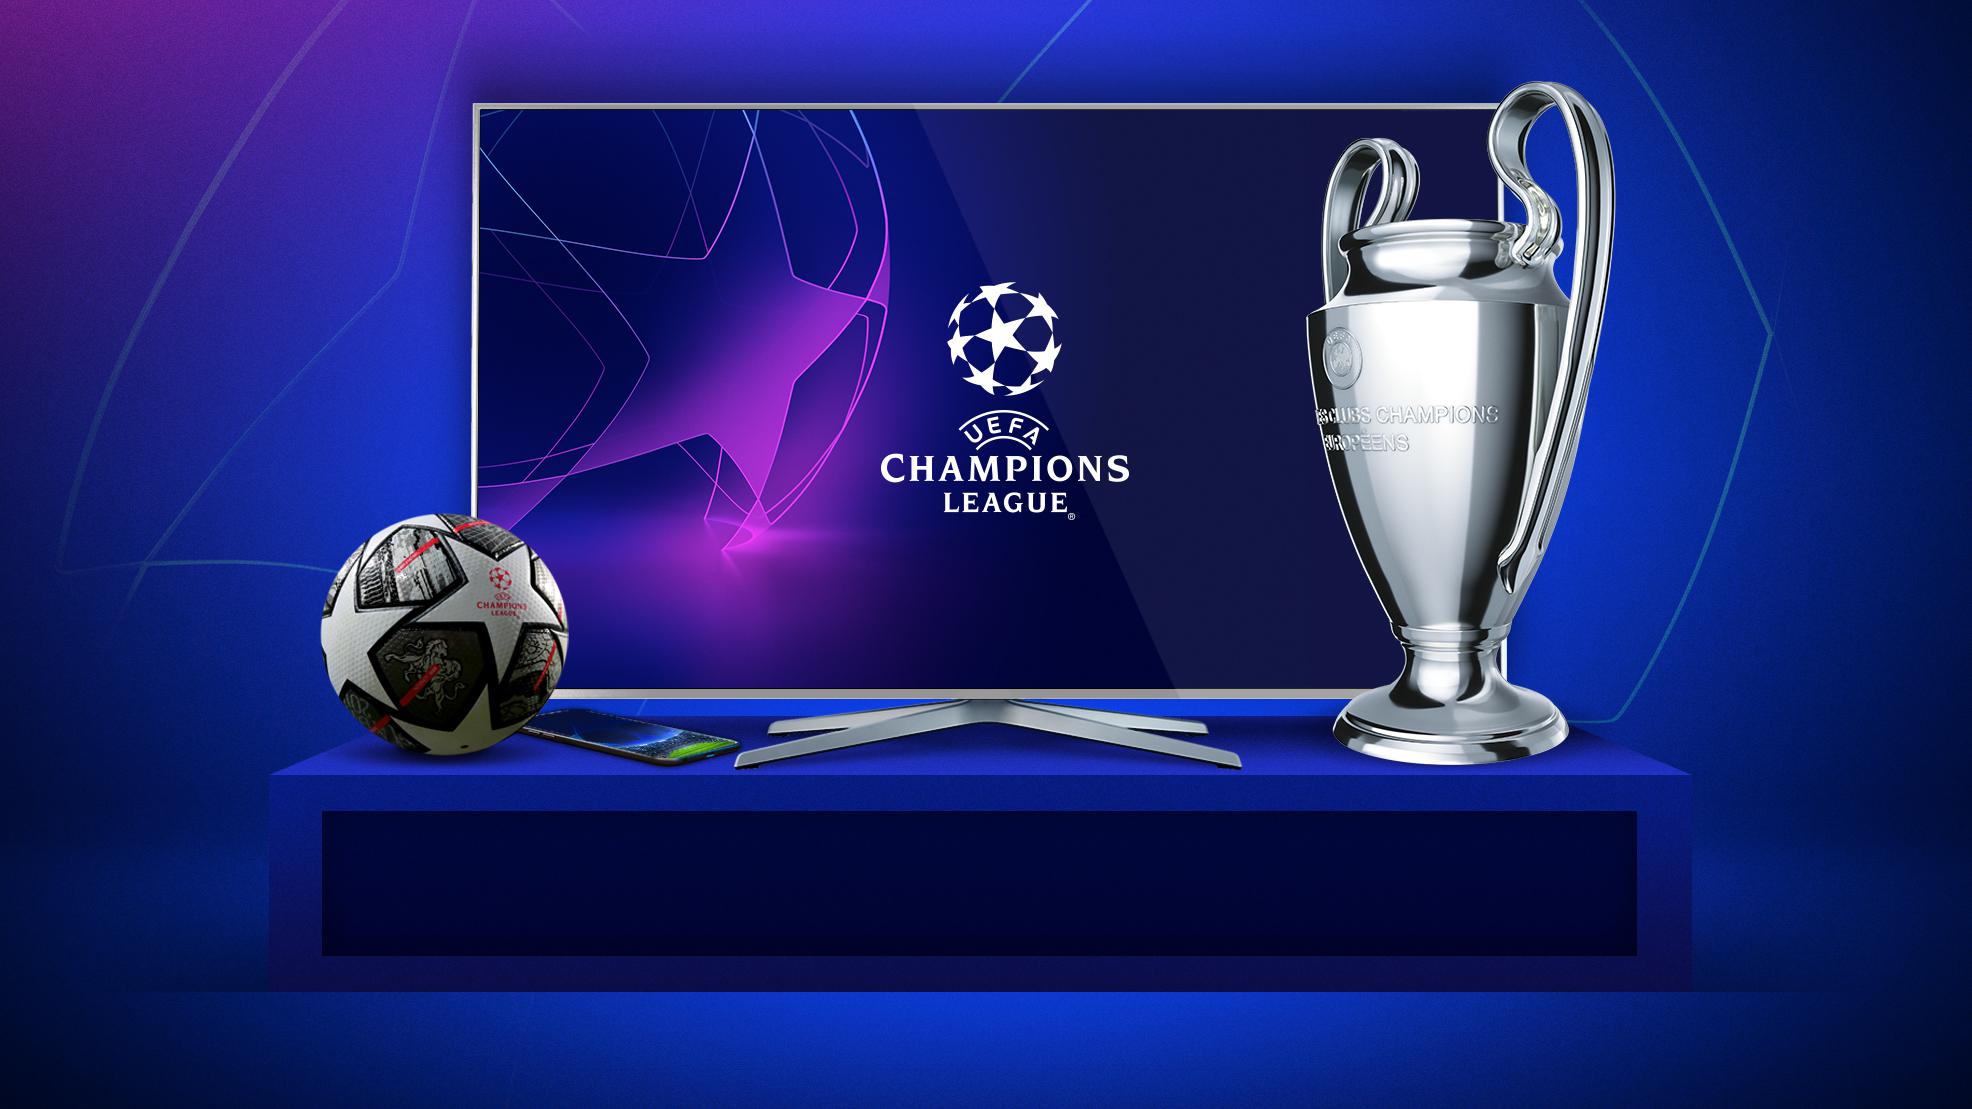 pensum låne kjole Where is the UEFA Champions League broadcast? | UEFA Champions League